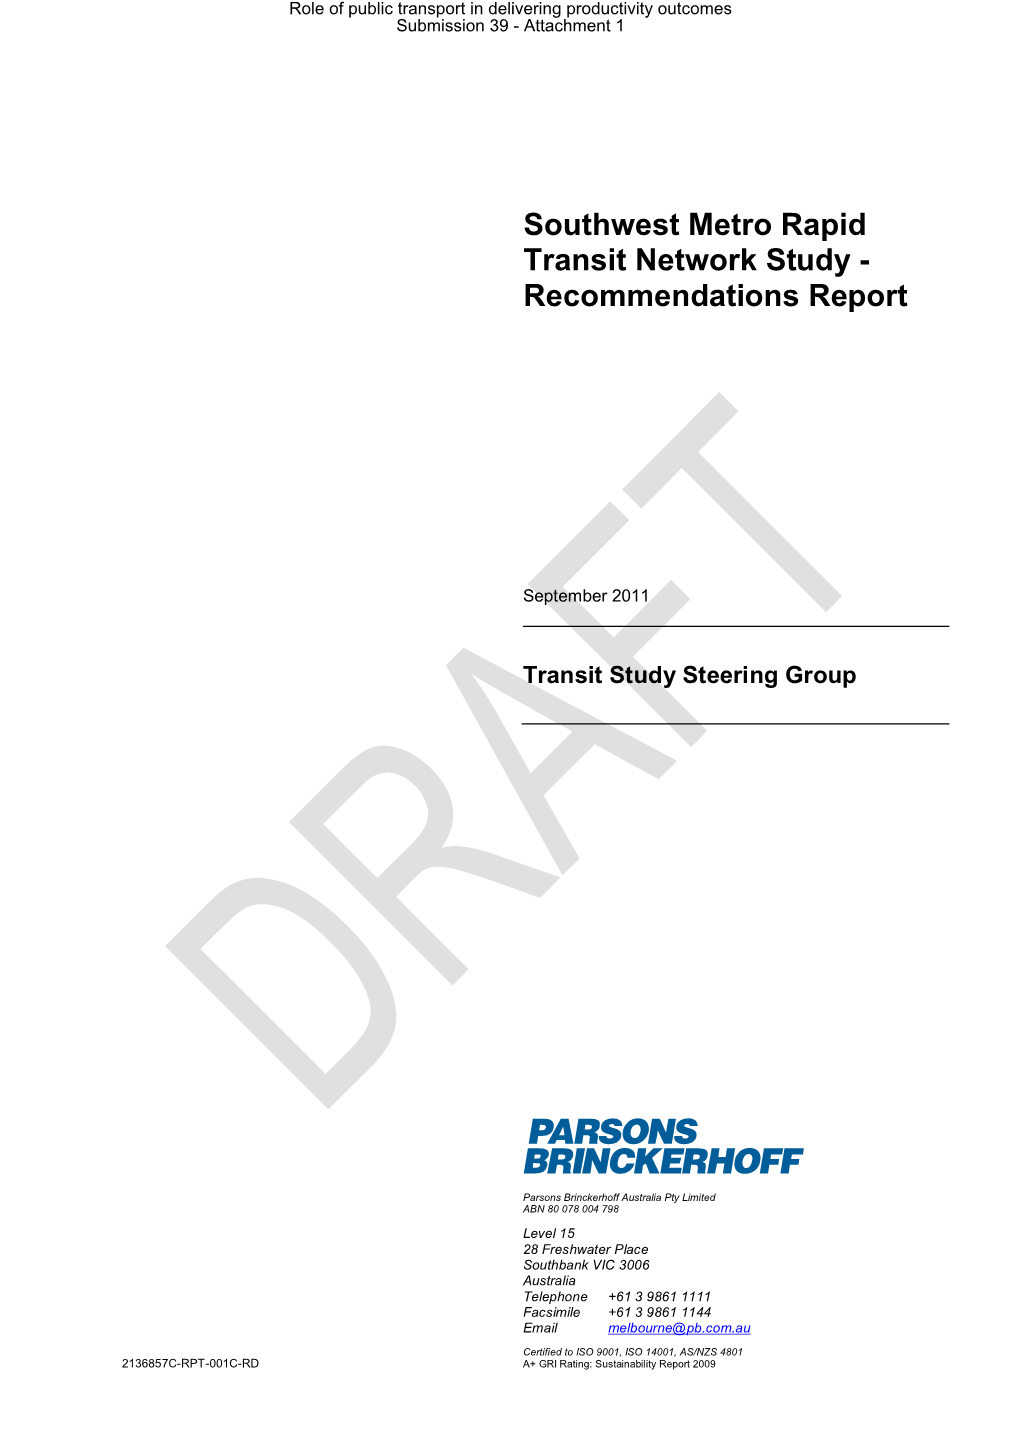 Southwest Metro Rapid Transit Network Study - Recommendations Report